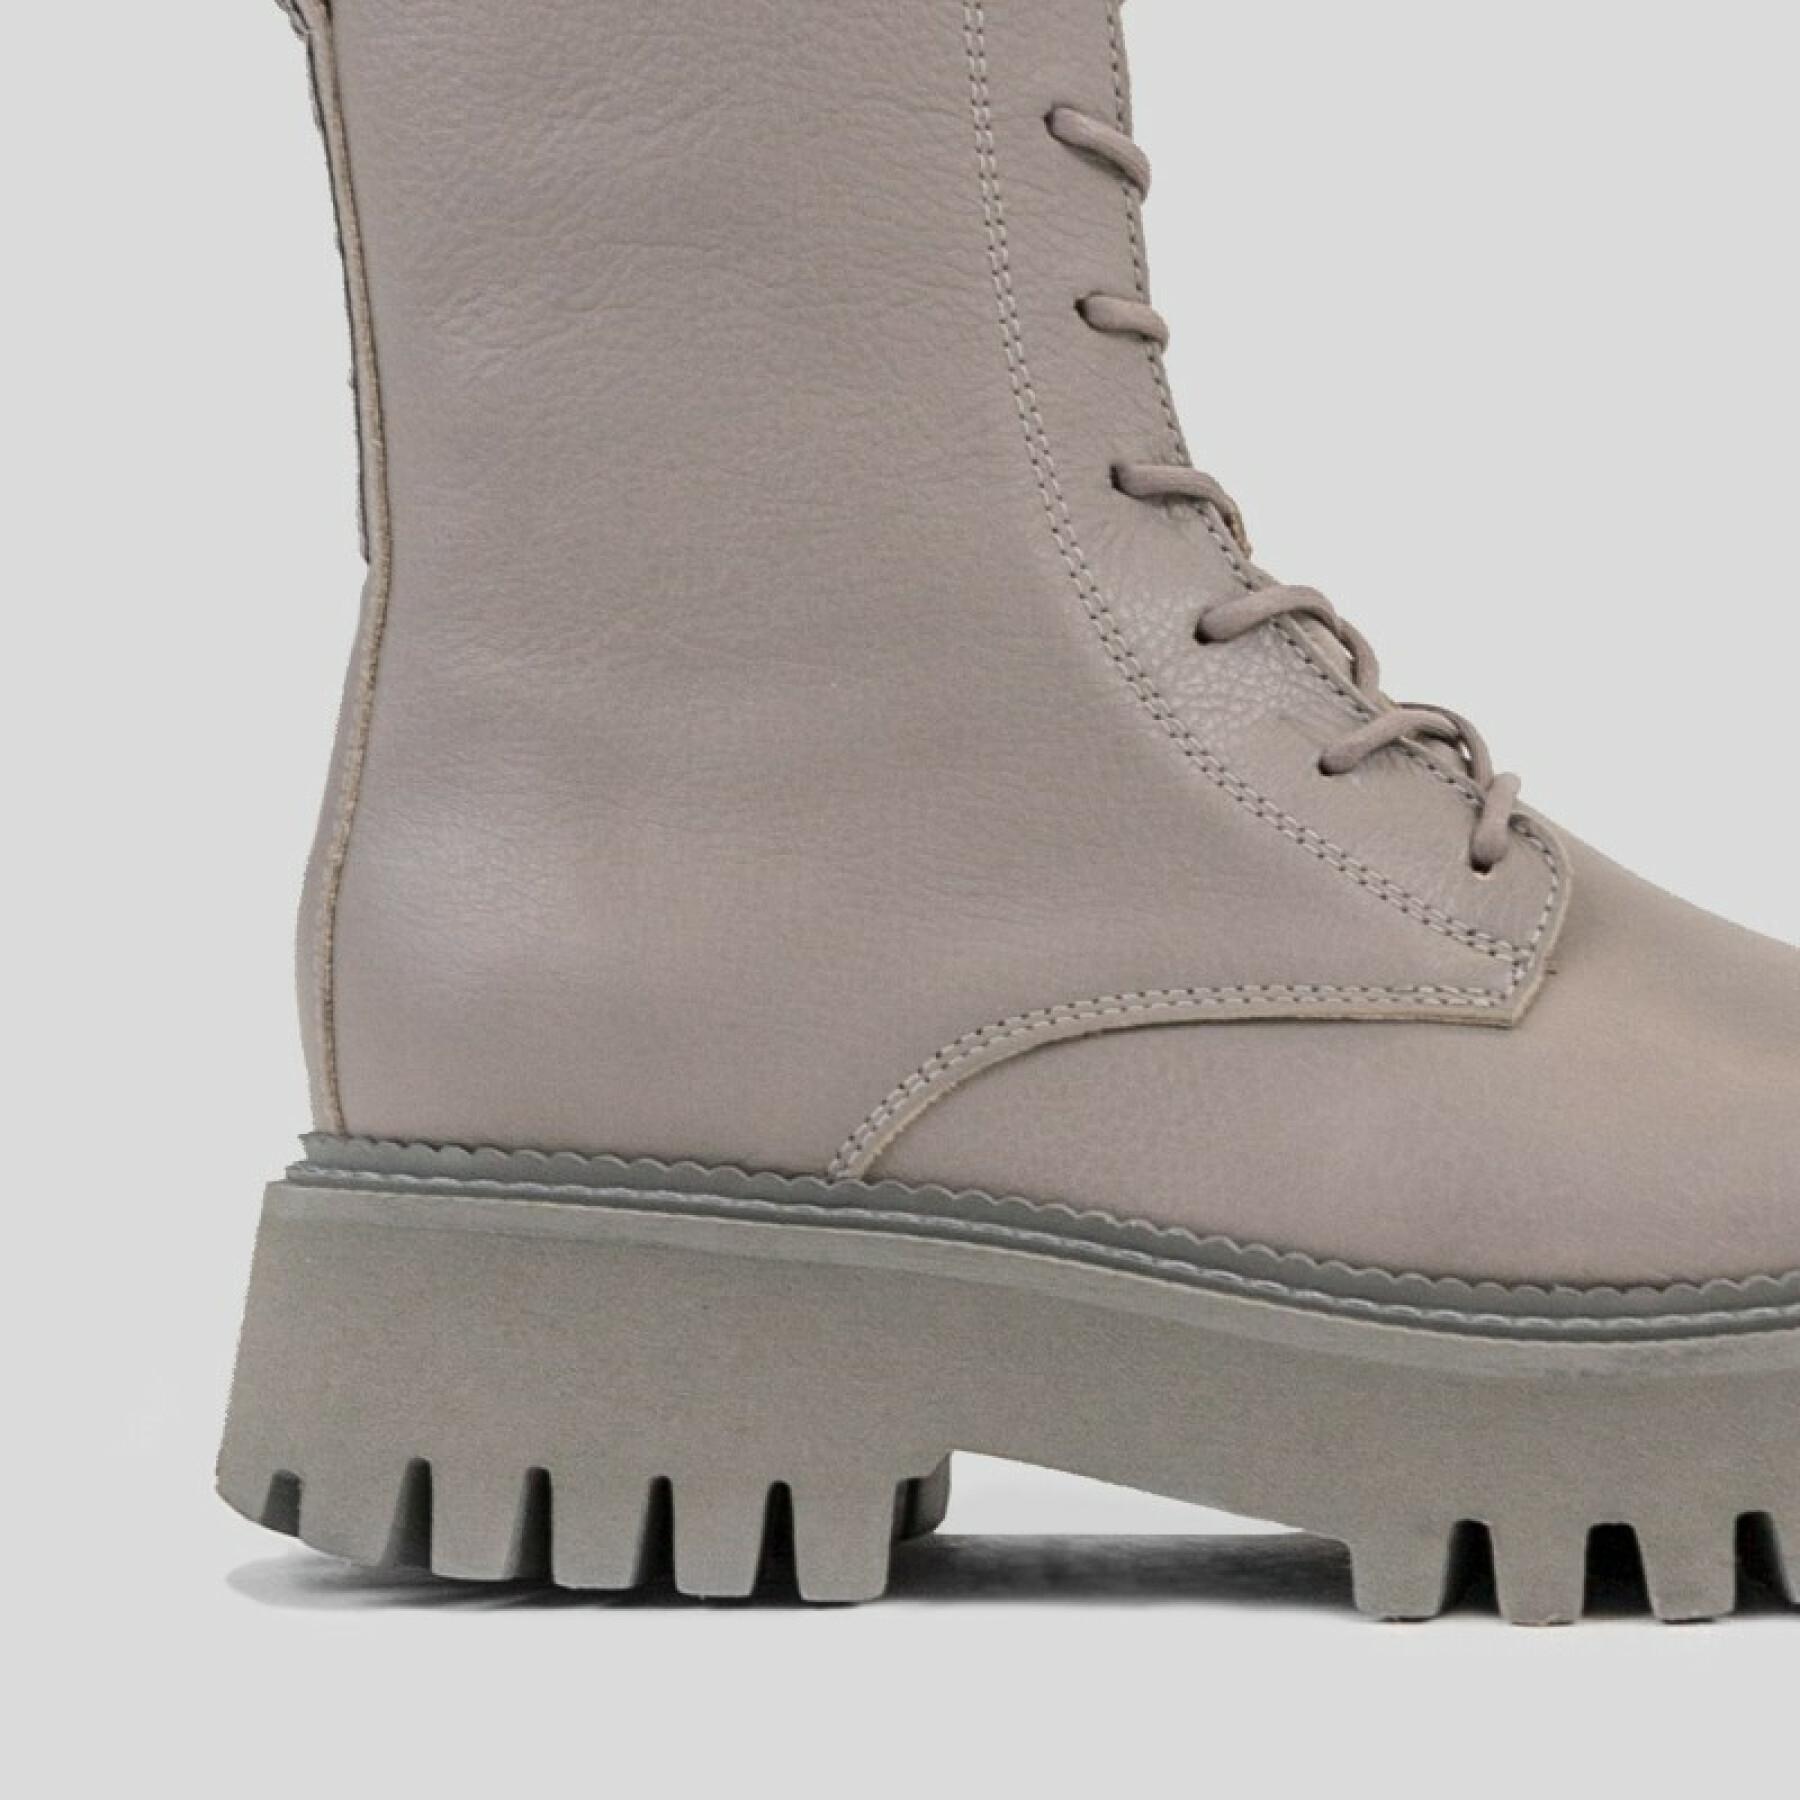 Women's biker boots Bronx Groov-y military